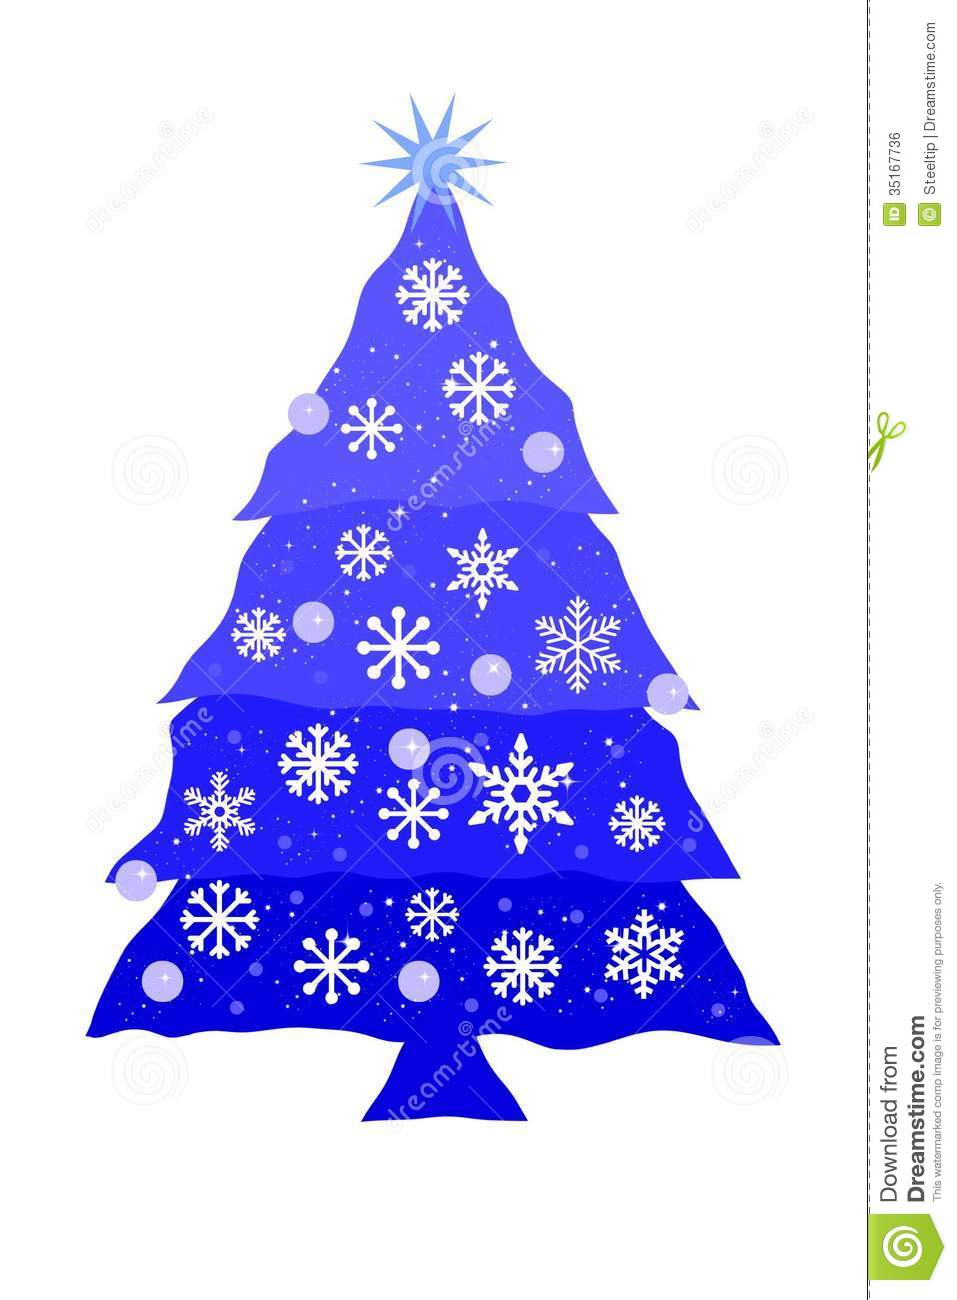 Blue Christmas Tree Royalty Free Stock Image   Image  35167736